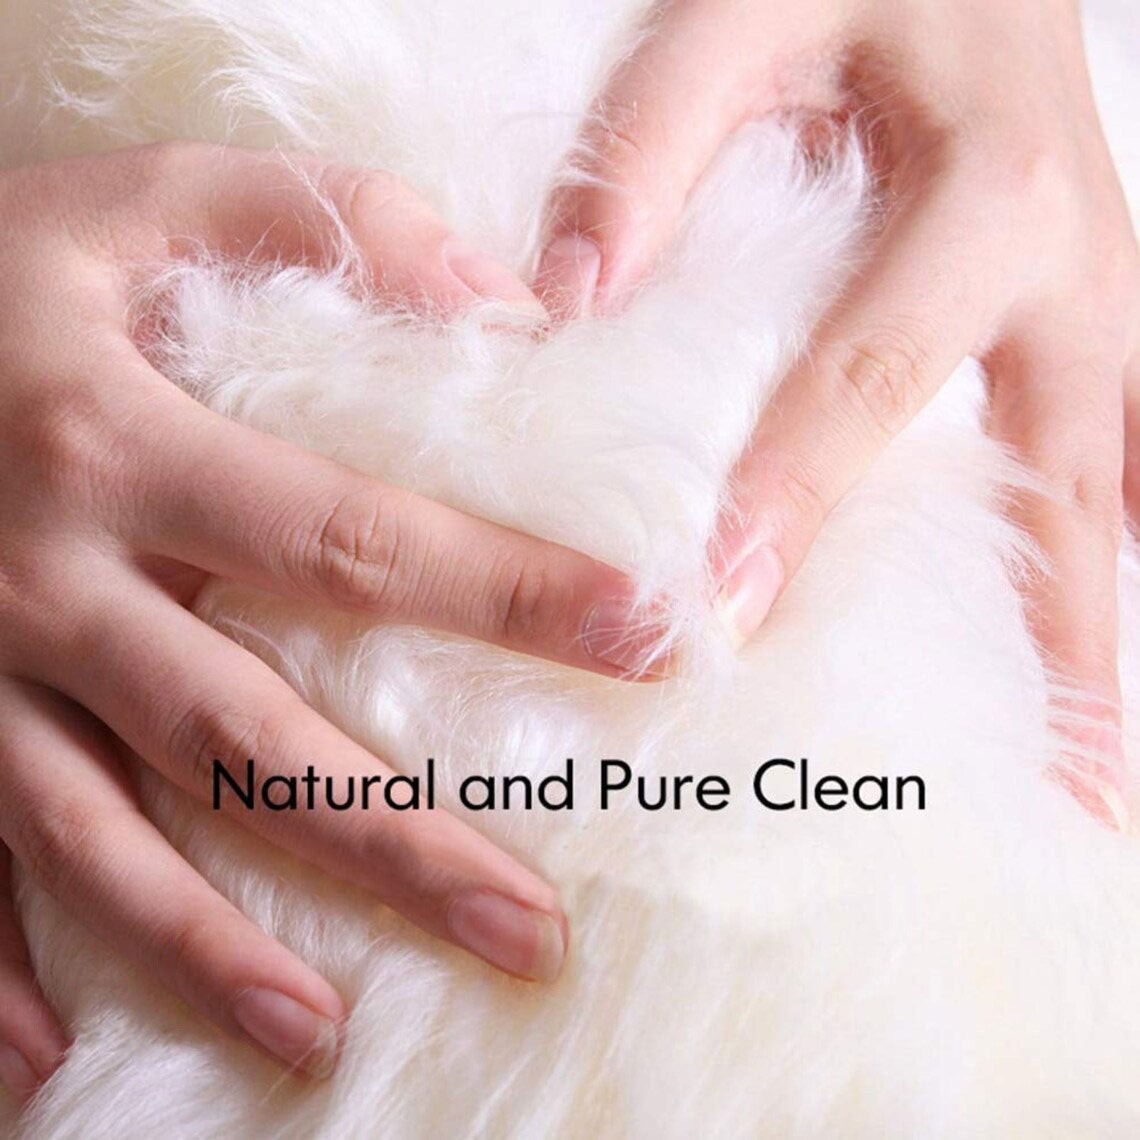 Luxurious Fluffy  Sheepskin rug | Sheepskin Carpet | Sheepskin Throw | Fur Rug Home Decor Gift